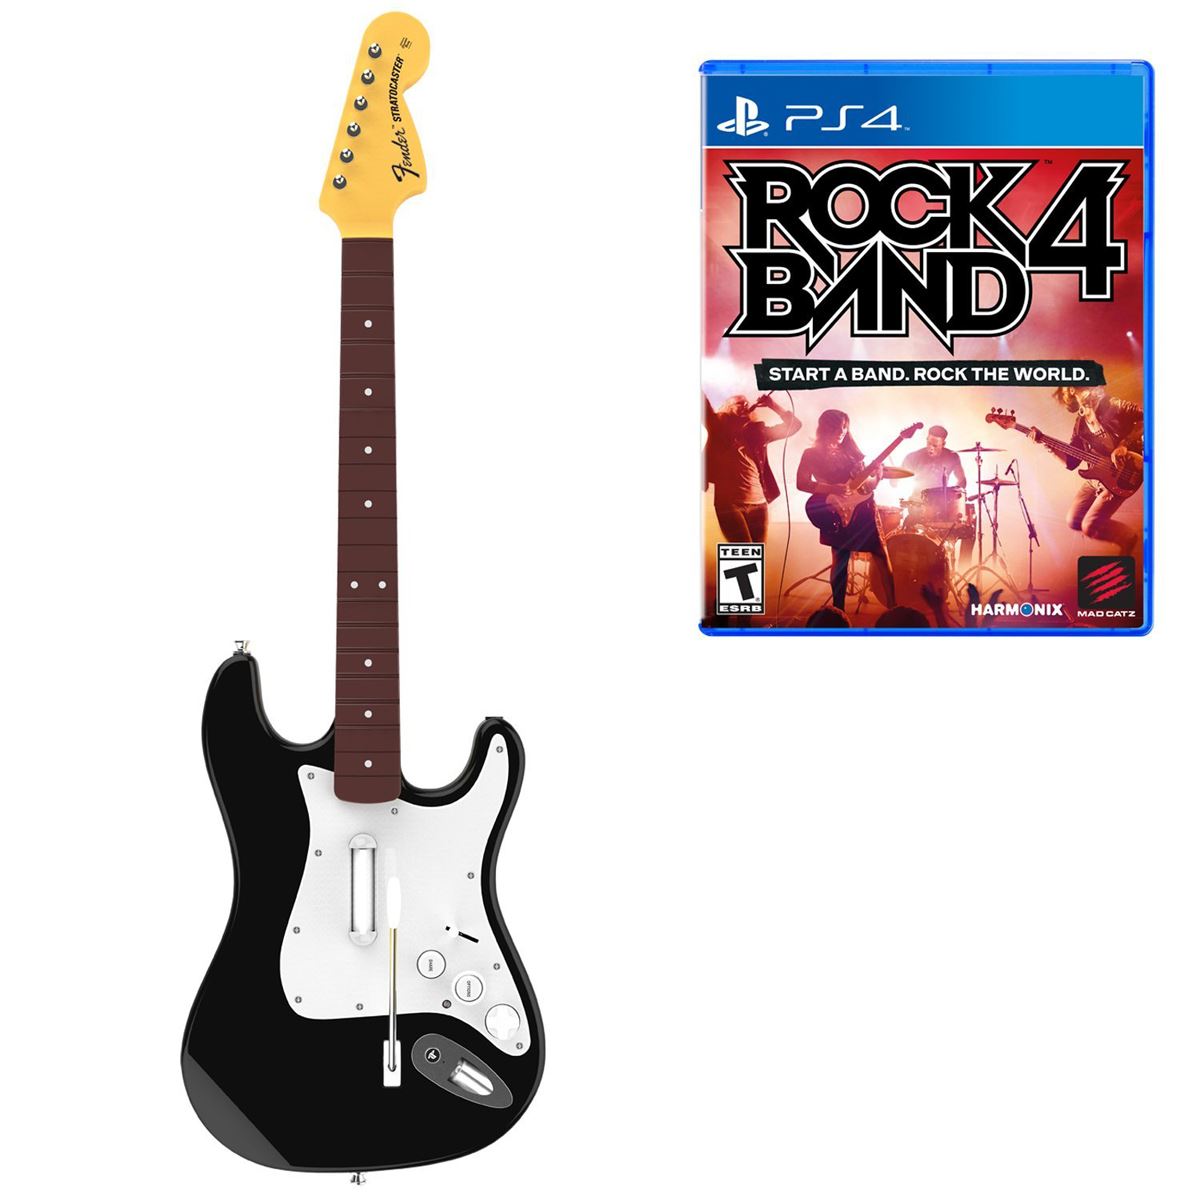 PS4 Rockband 4 Guitar Bundle